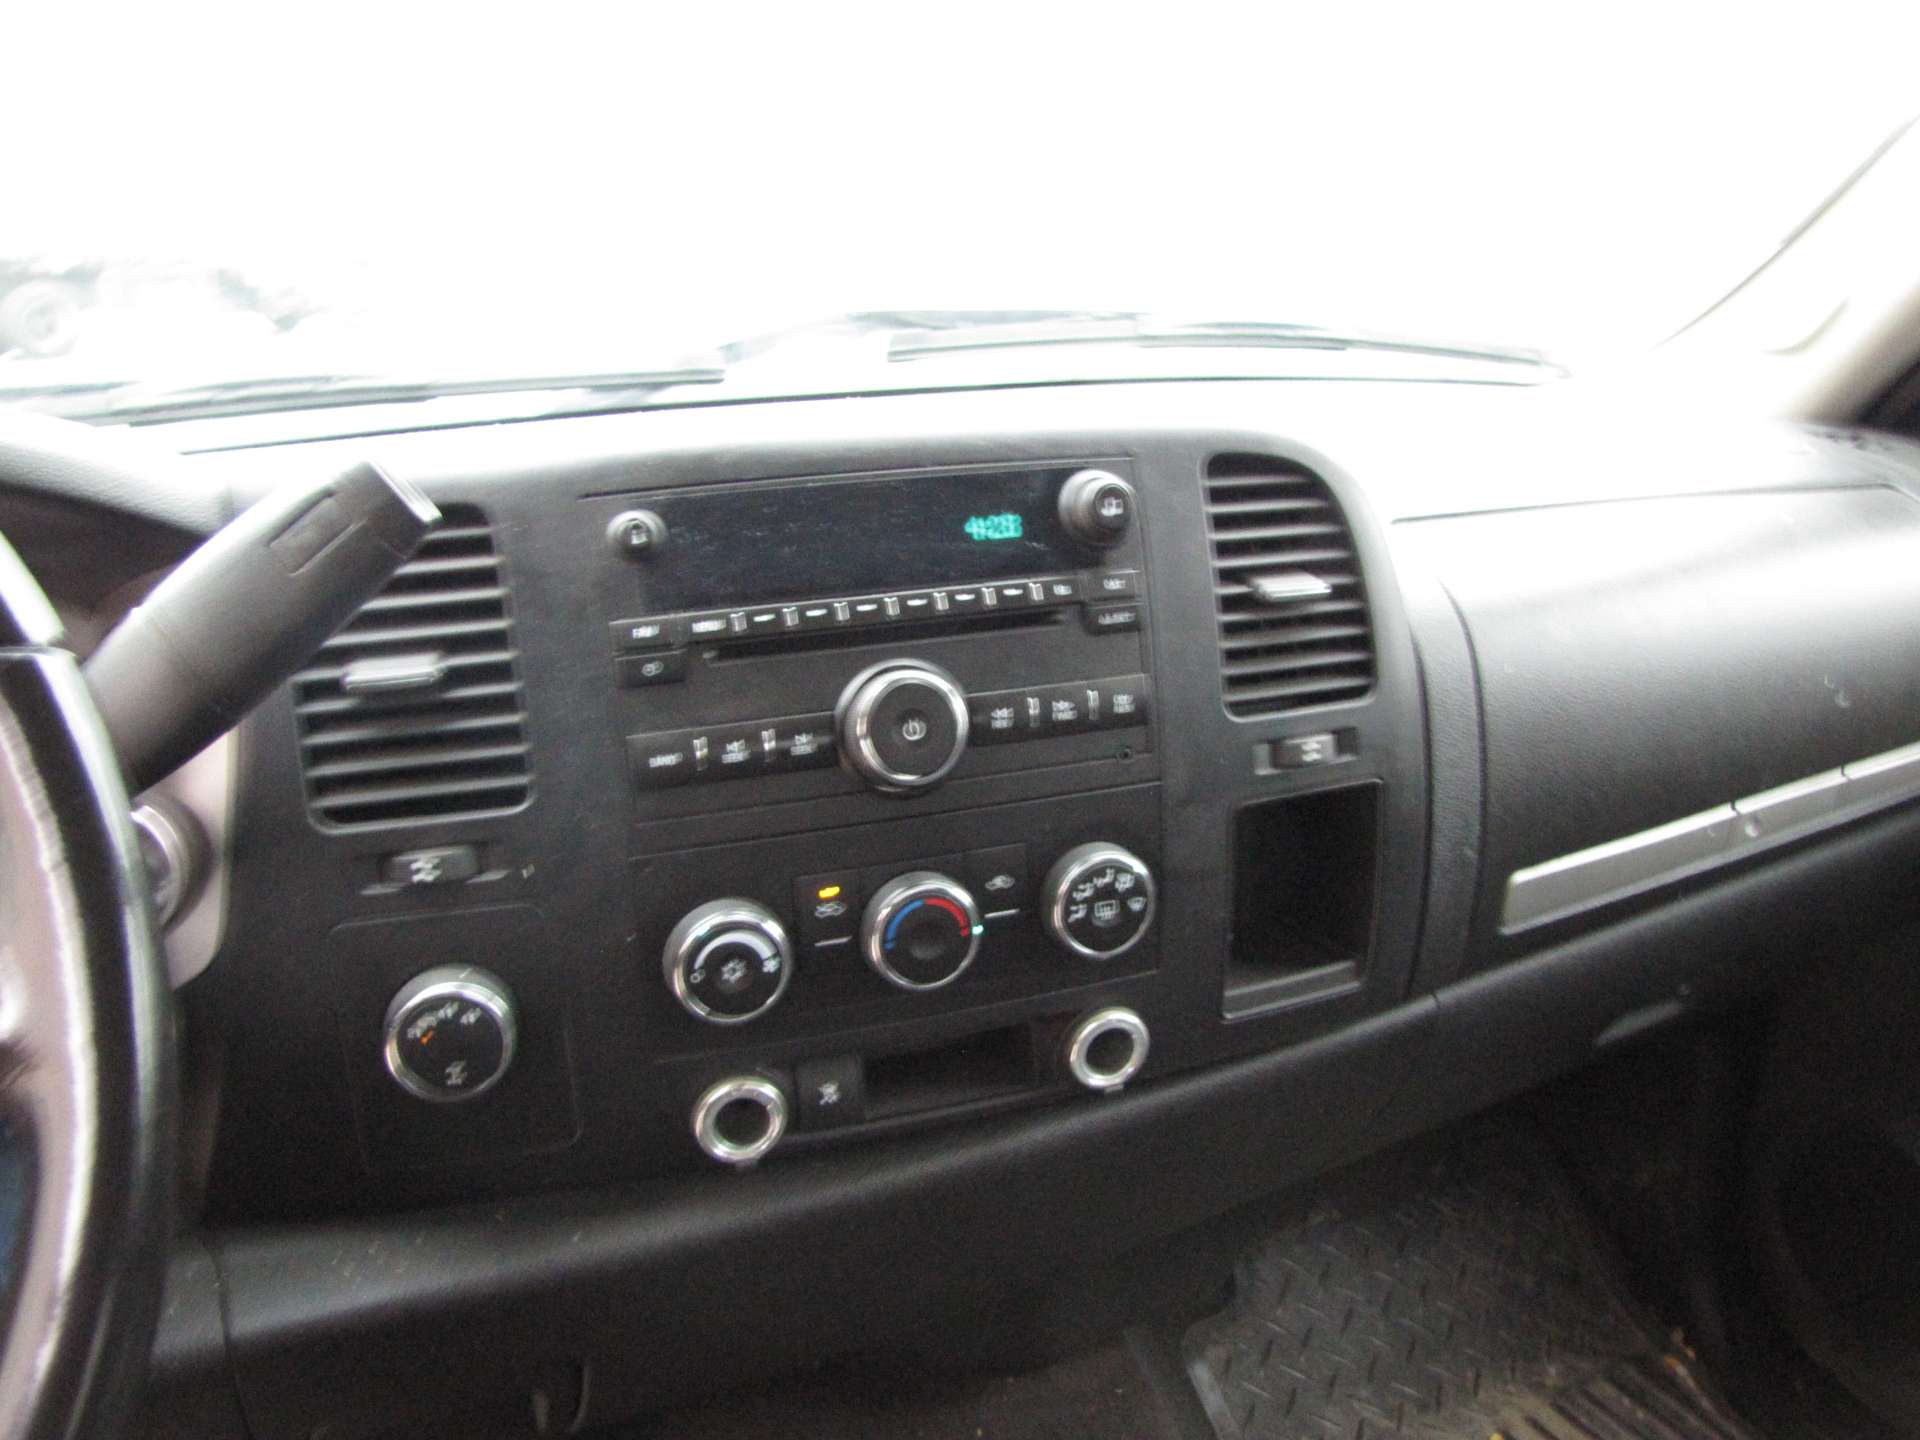 2008 Chevy Silverado 1500 LT pickup truck - Image 49 of 59